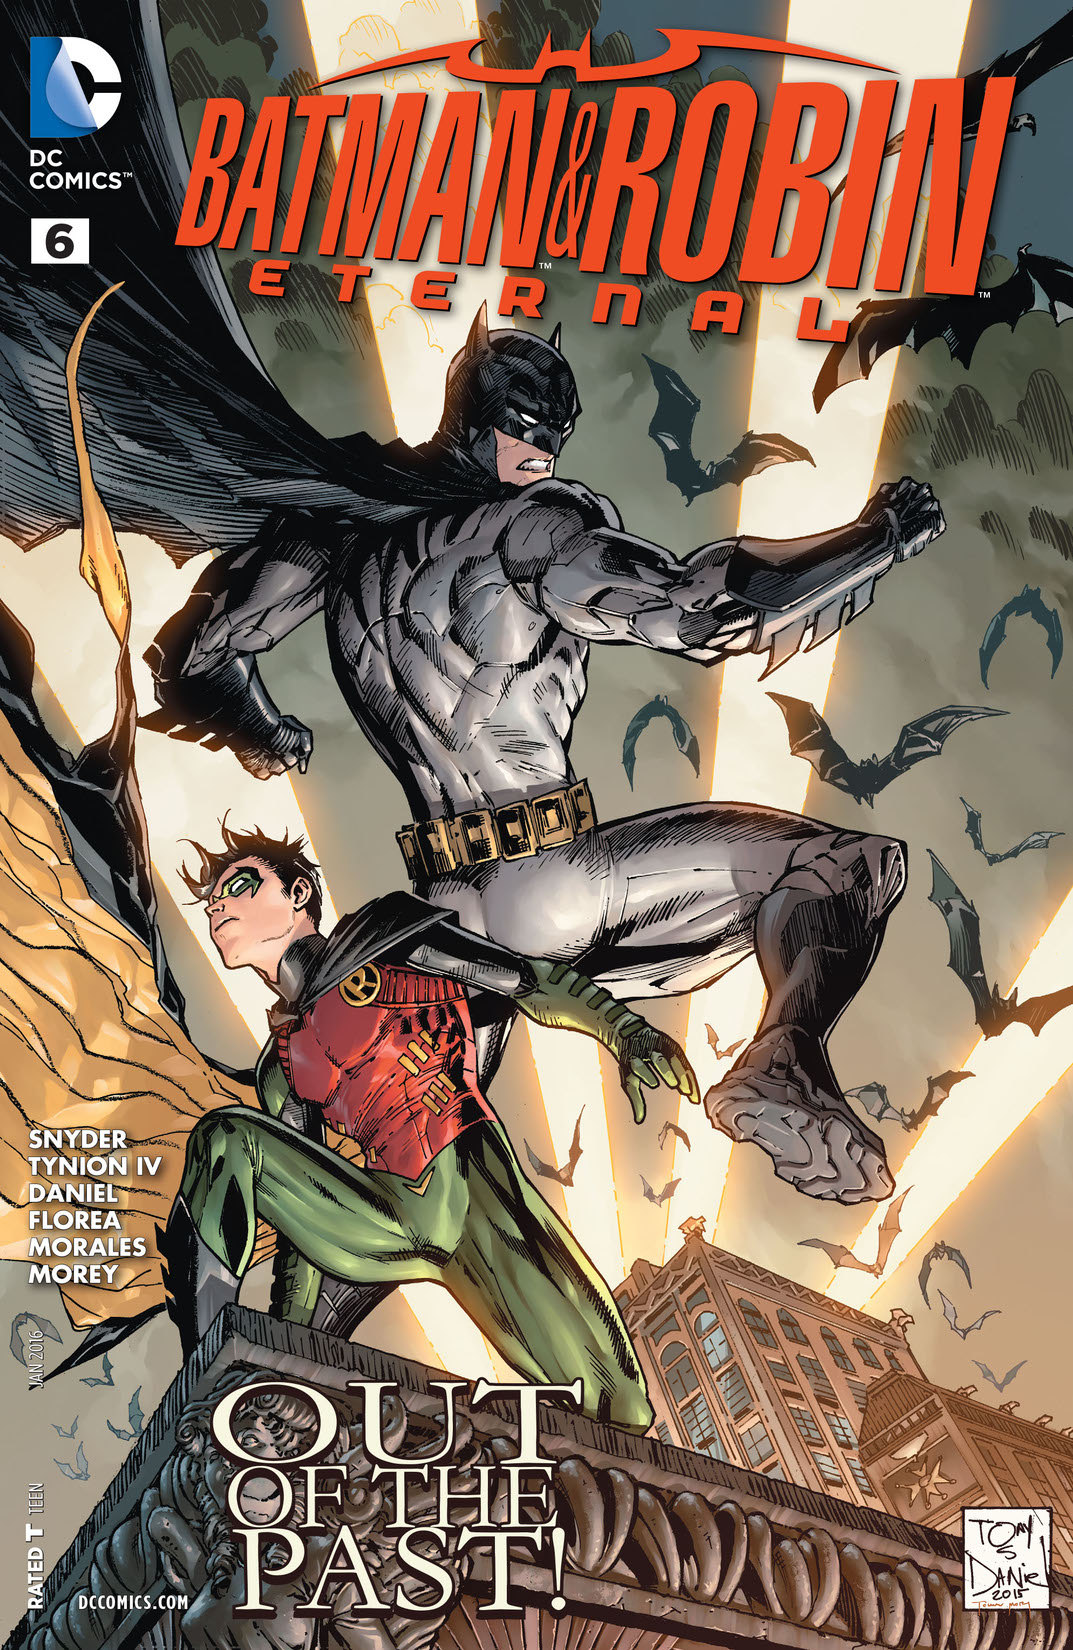 Batman & Robin Eternal #6 preview images